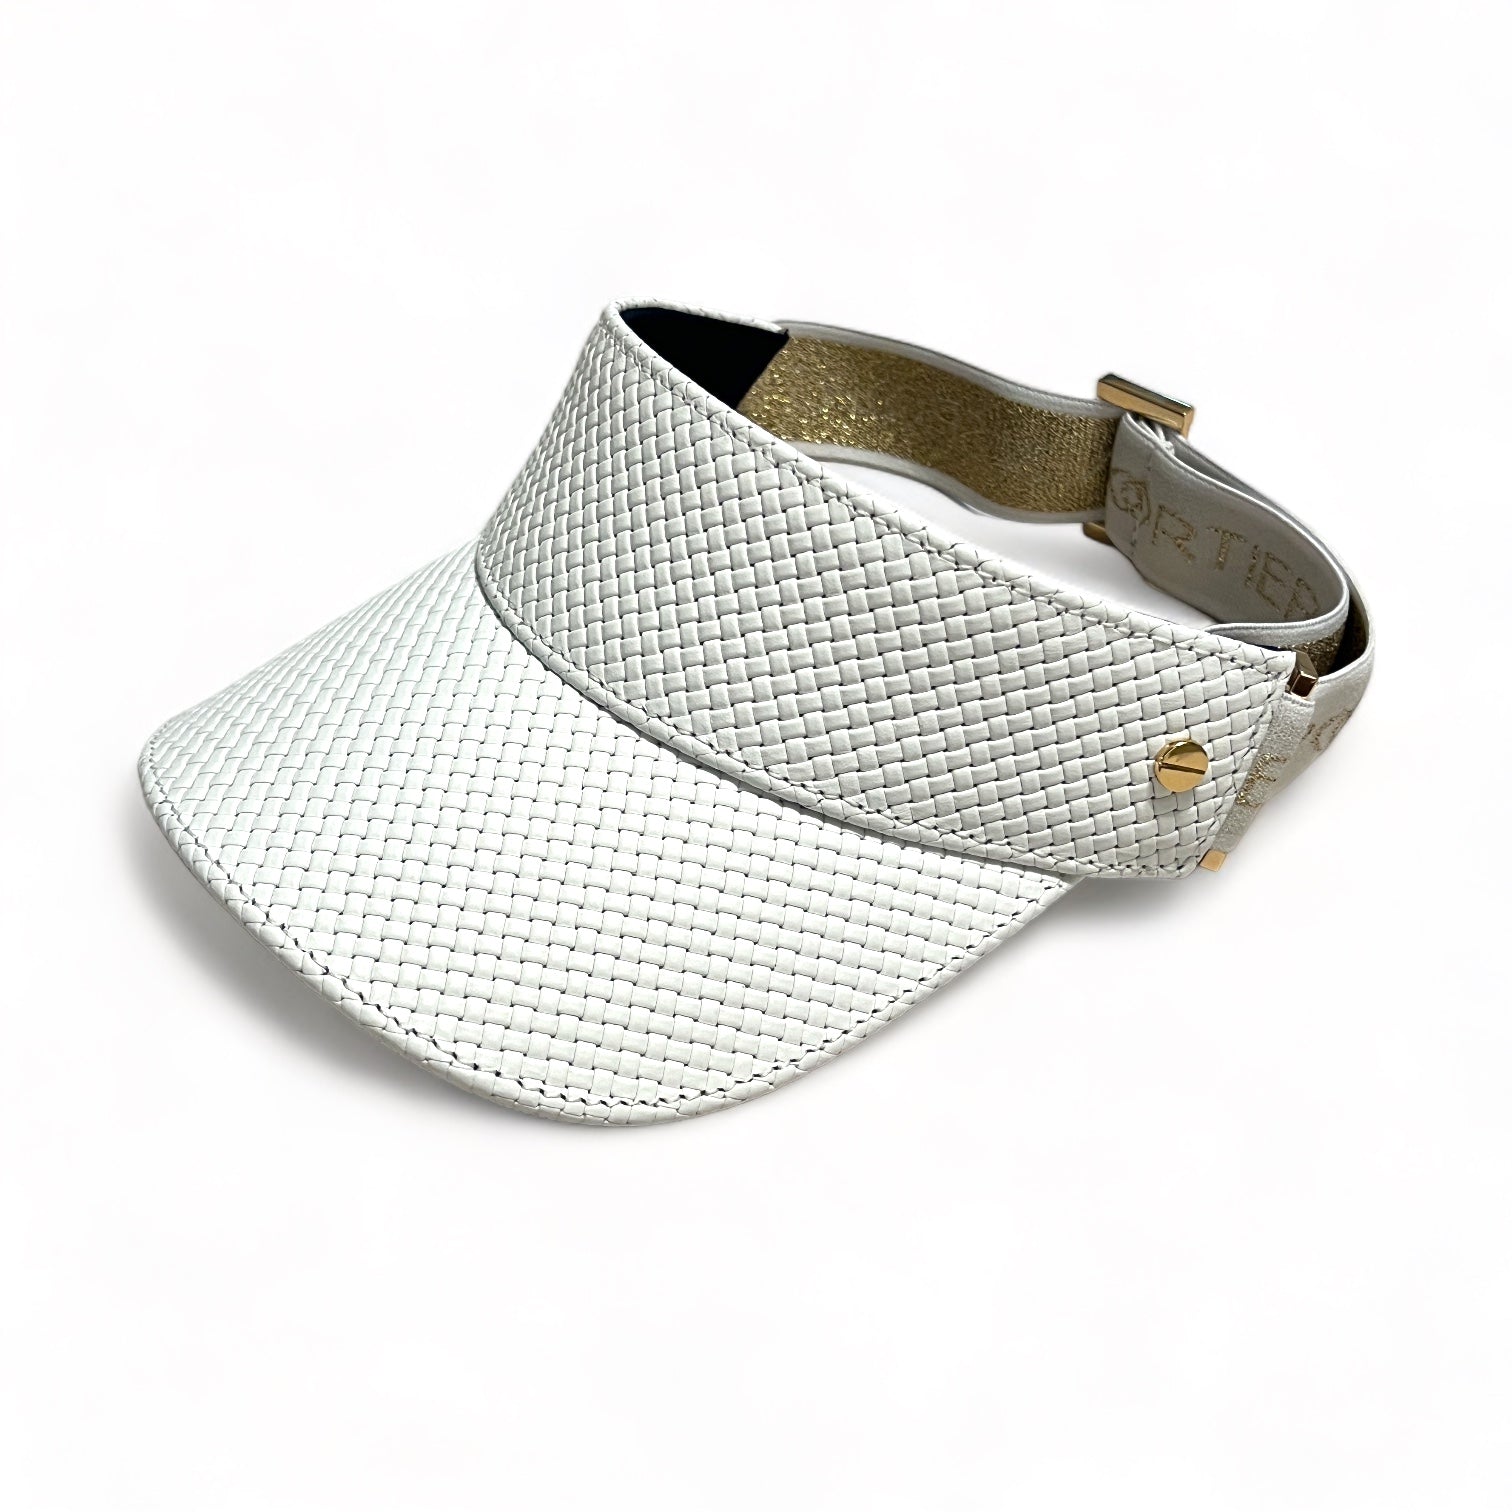 The Visor - Ltd Edition - Basketweave White Leather & Gold